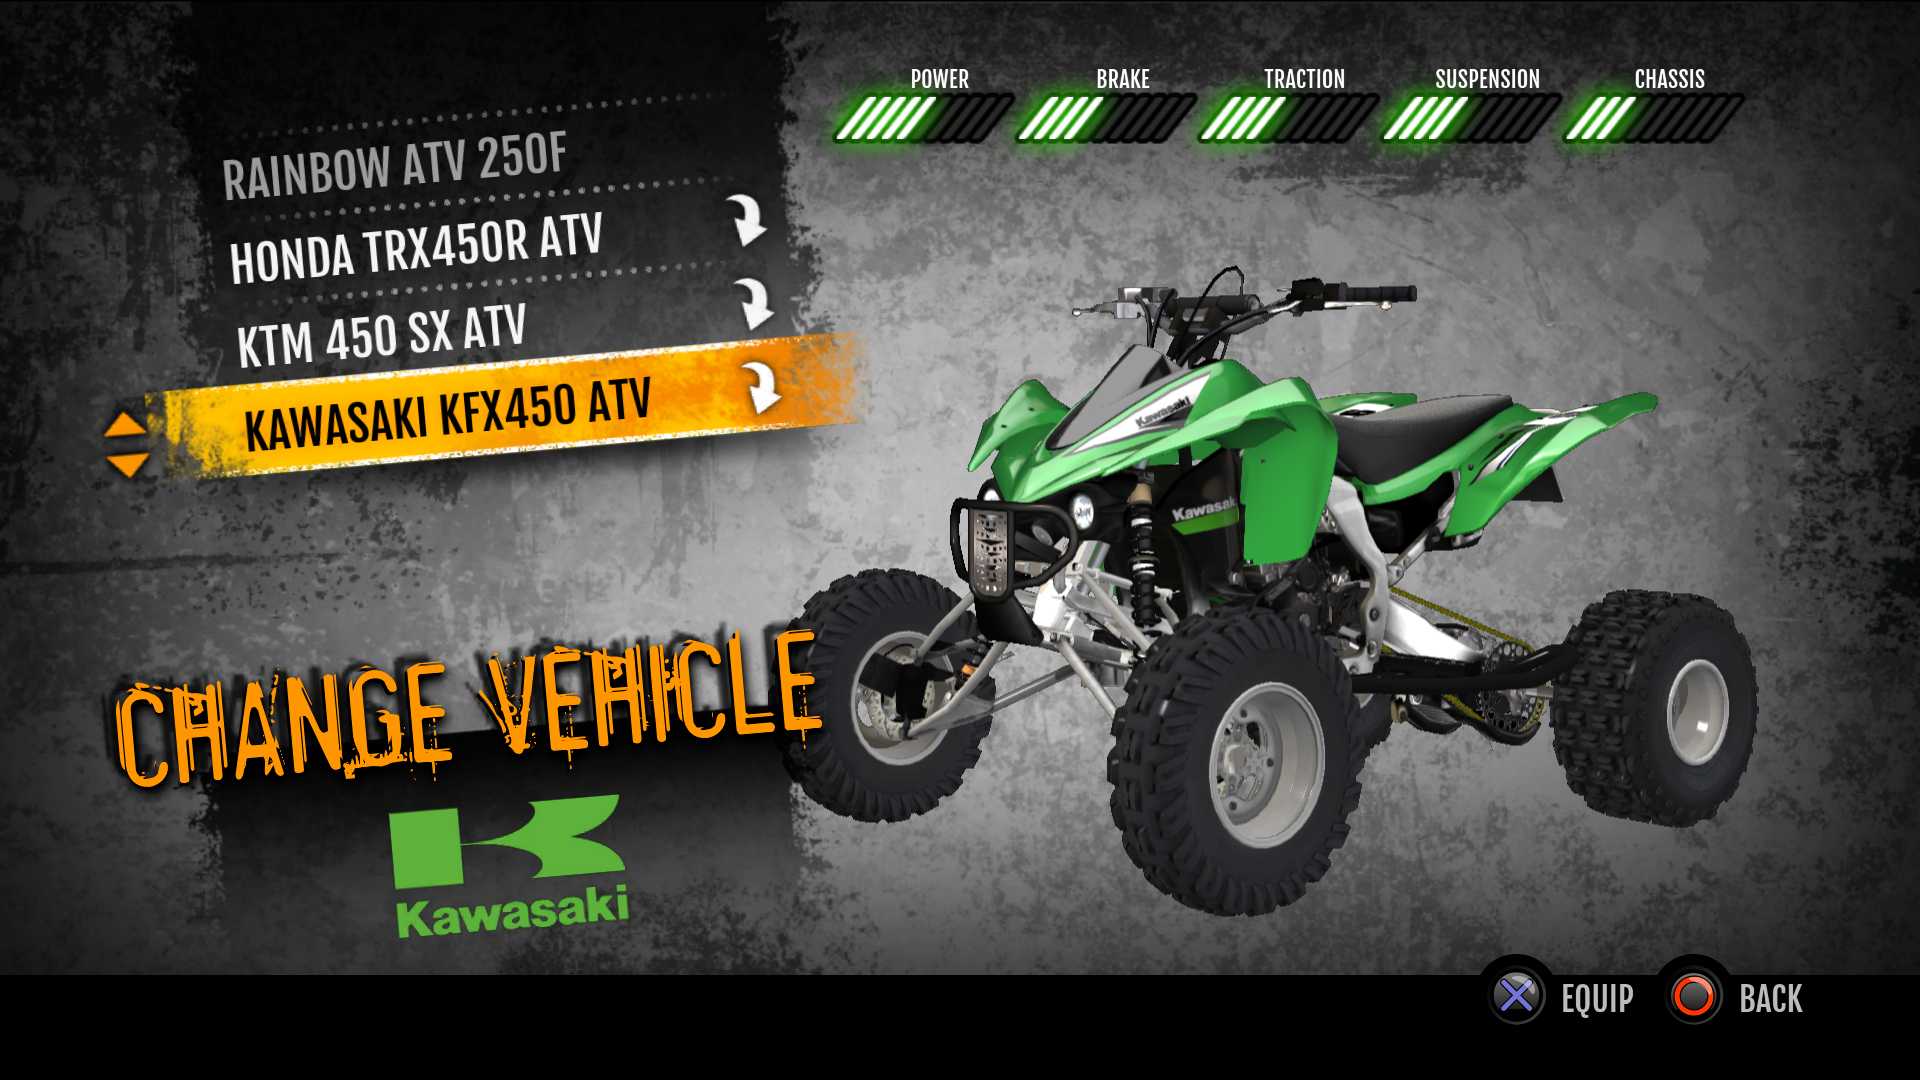 Kostbar Udsøgt kant MX vs. ATV Supercross Encore - Kawasaki KFX450 ATV on Steam